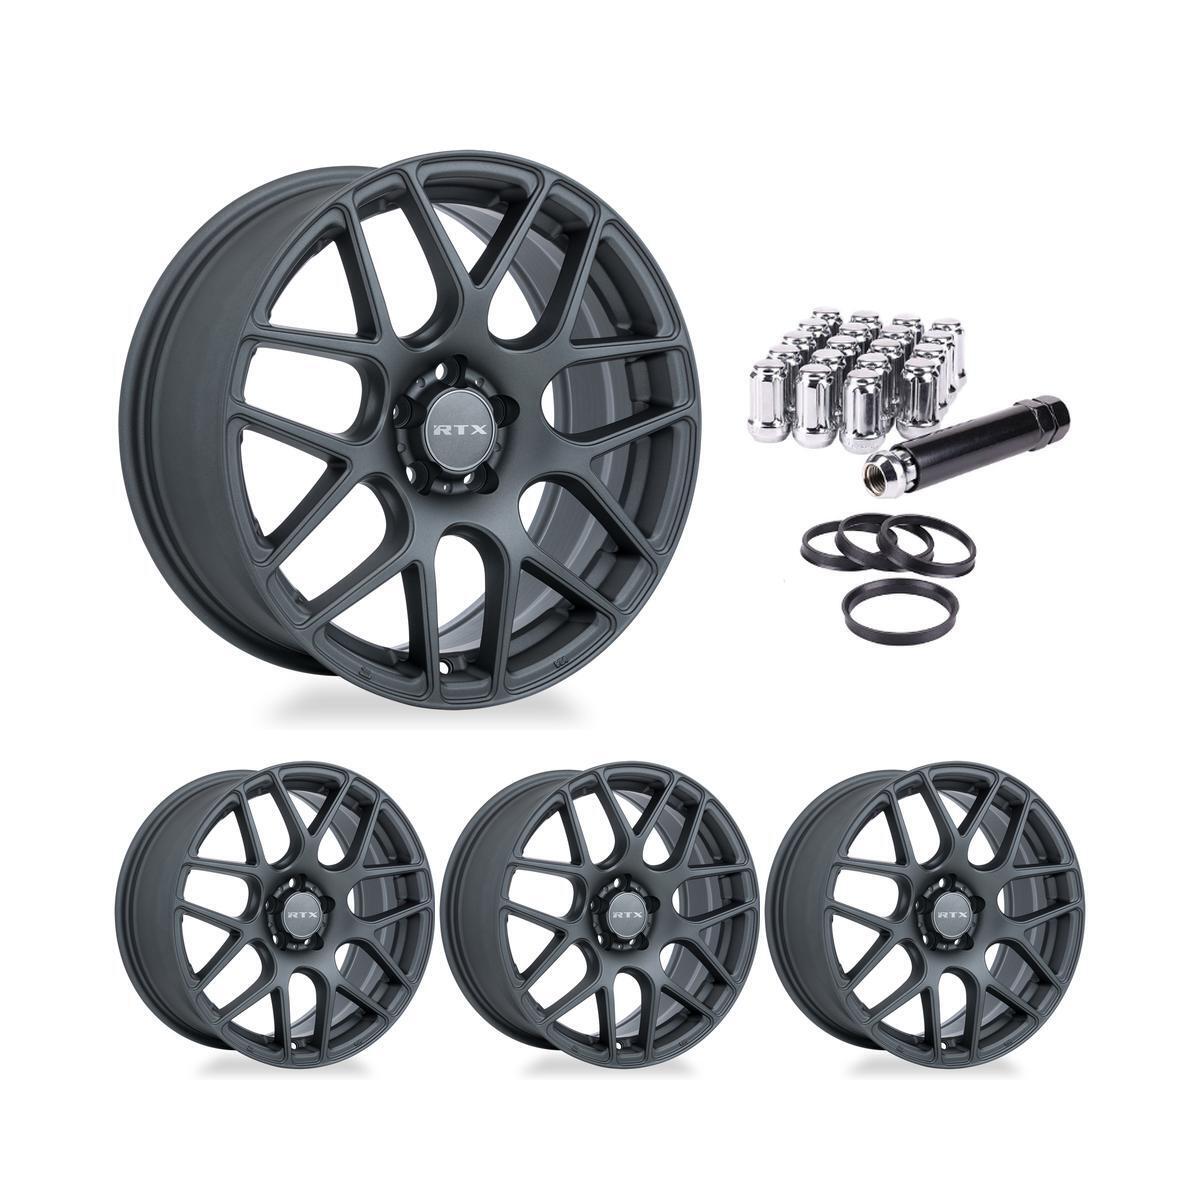 Wheel Rims Set with Chrome Lug Nuts Kit for 03-10 Pontiac Vibe P889538 17 inch